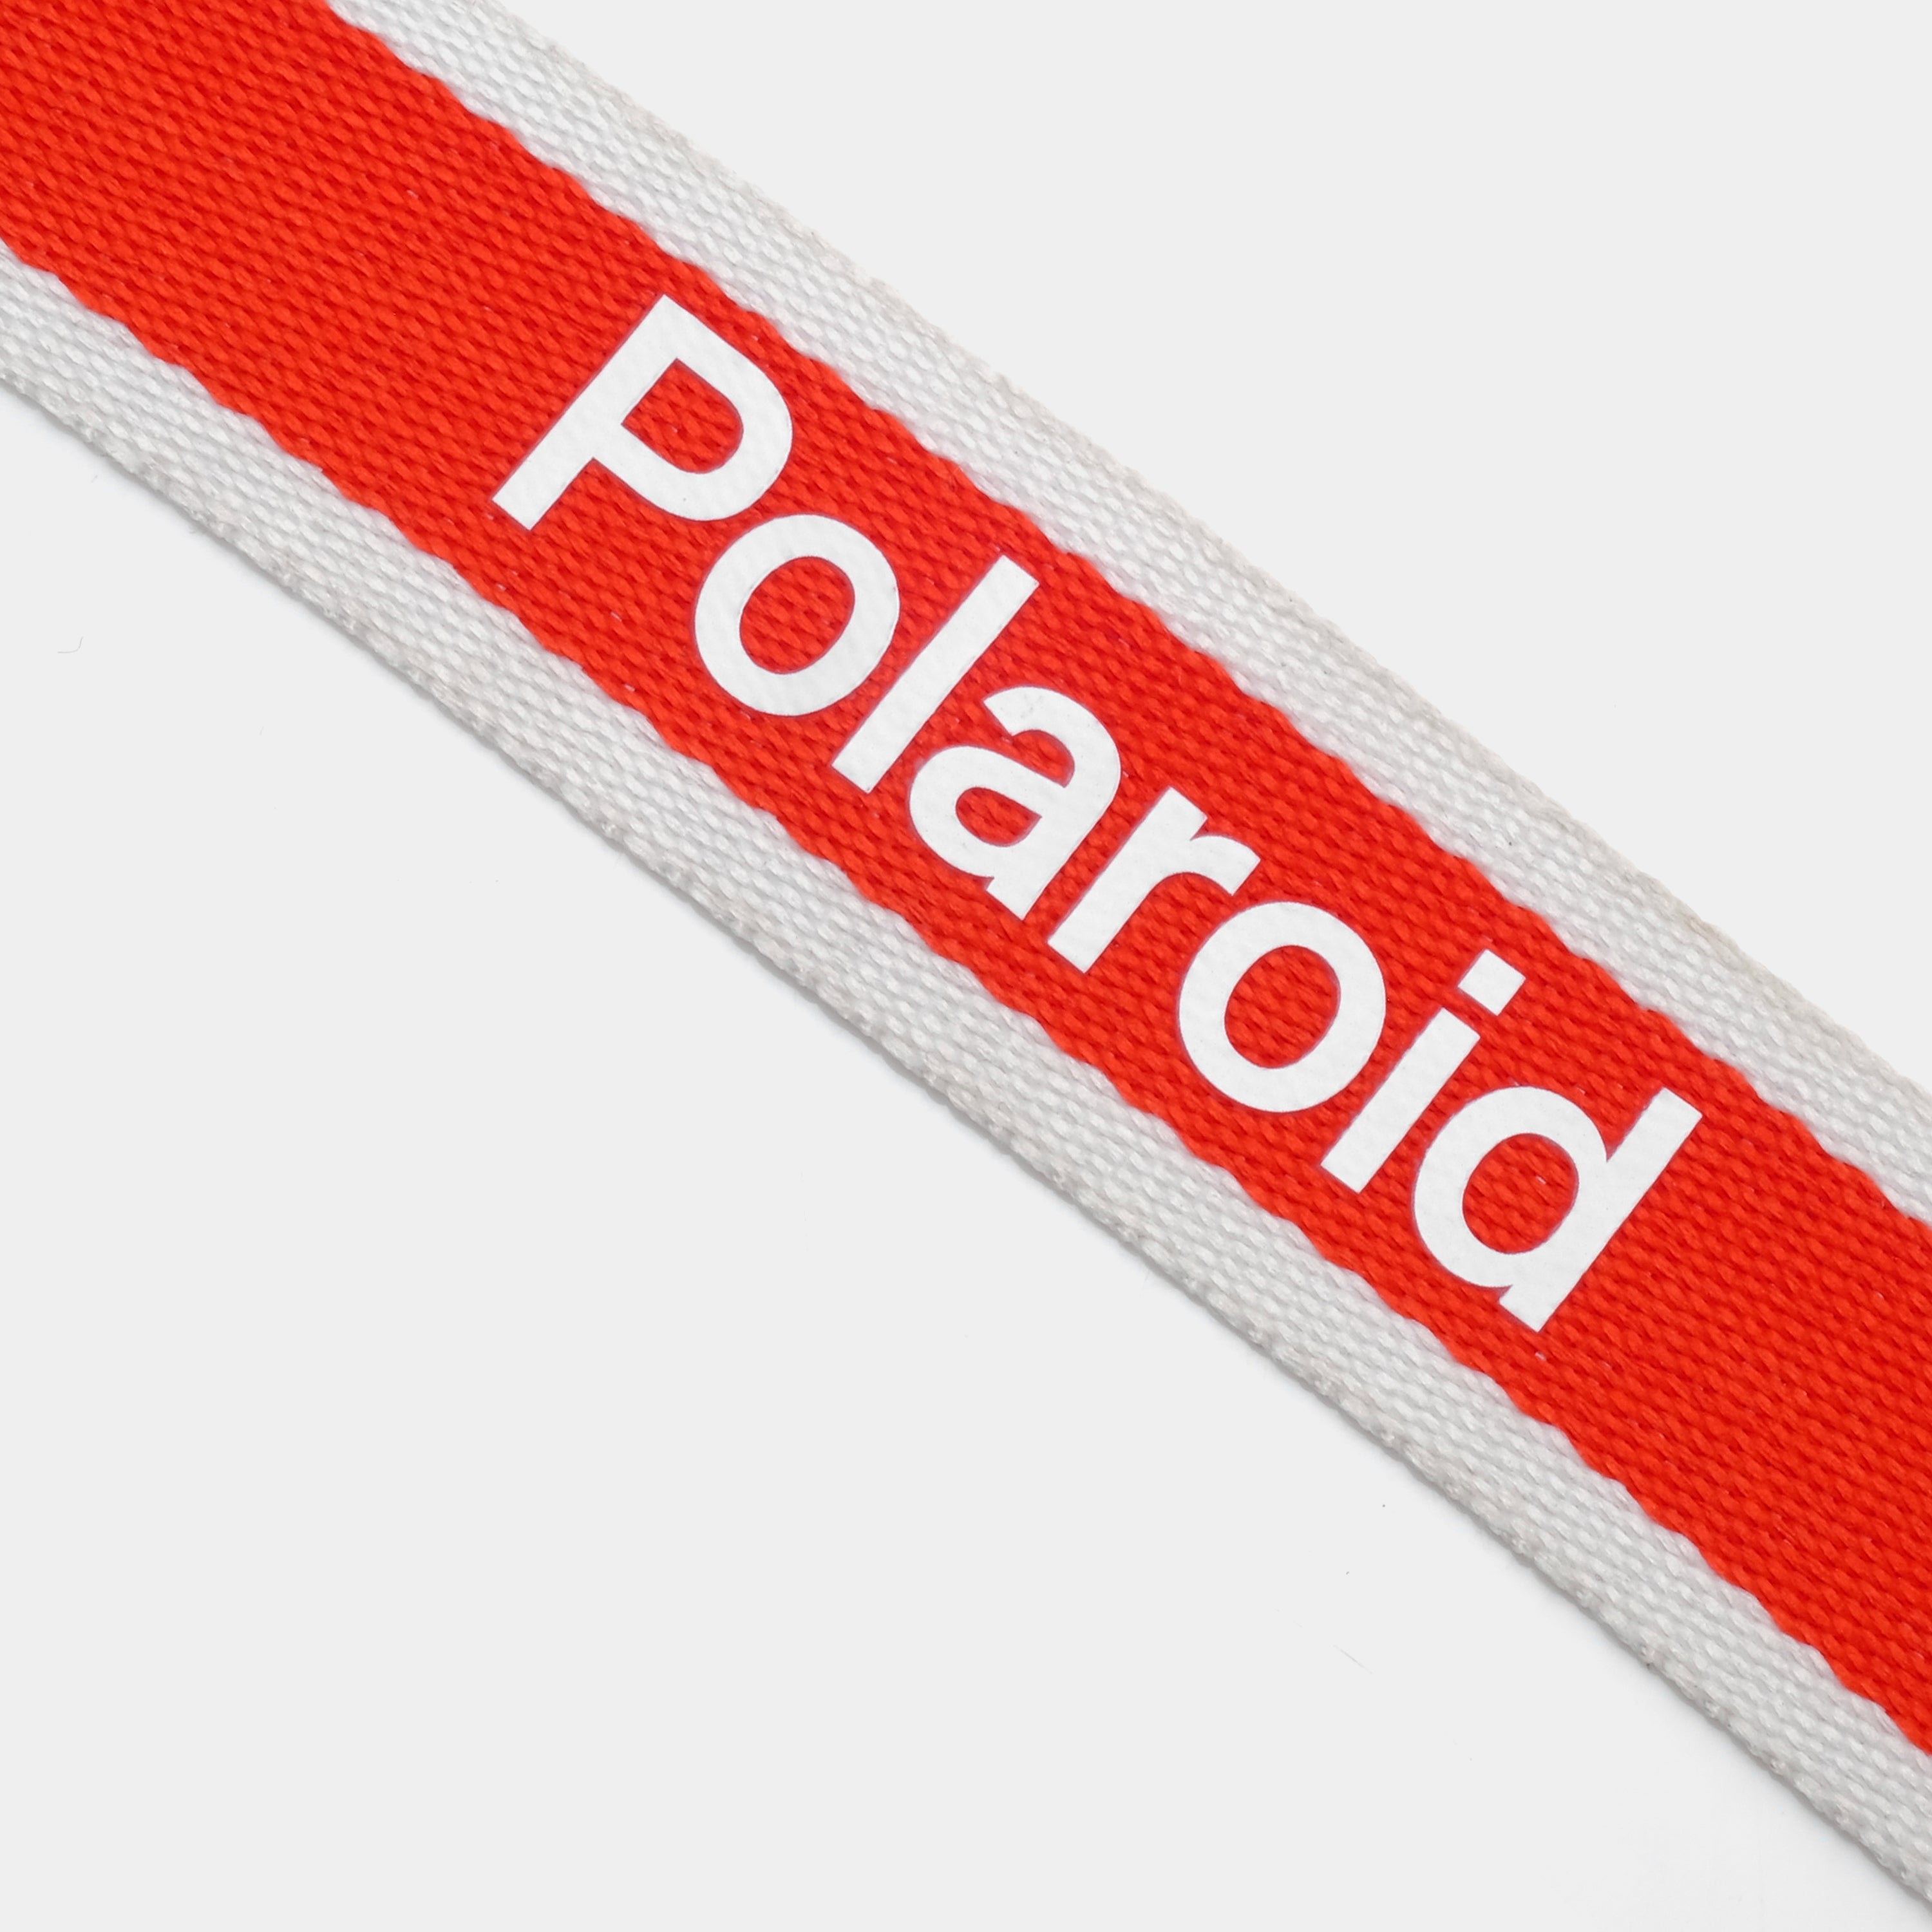 Polaroid Logo Red and White Camera Strap